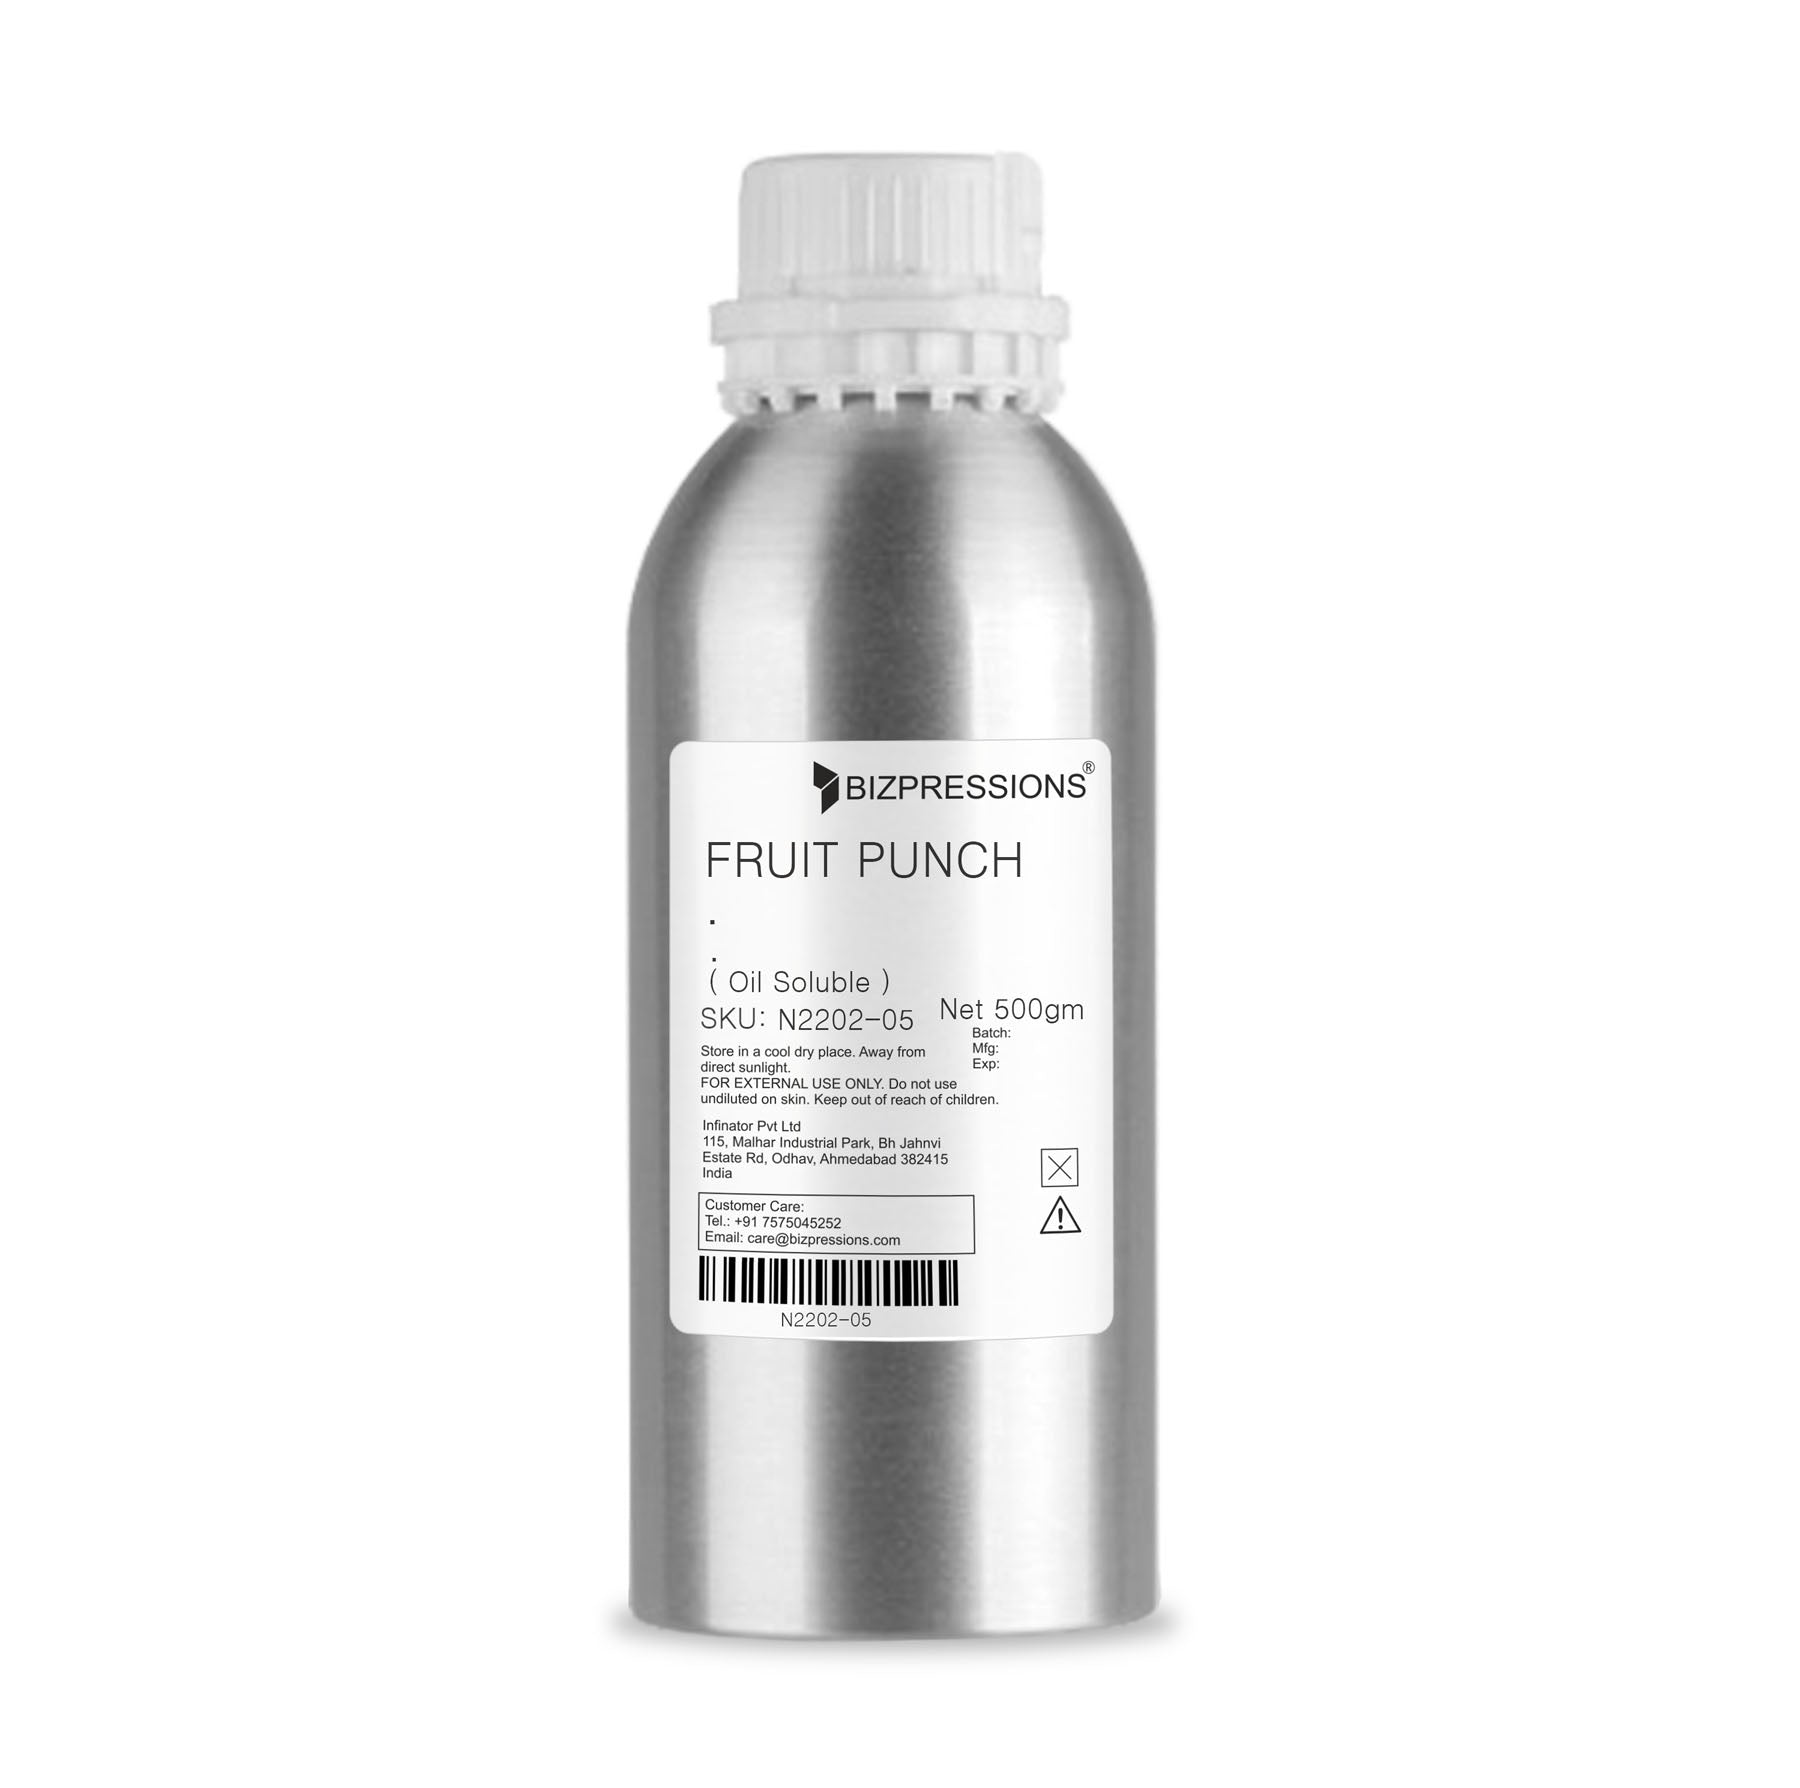 FRUIT PUNCH - Fragrance ( Oil Soluble ) - 500 gm